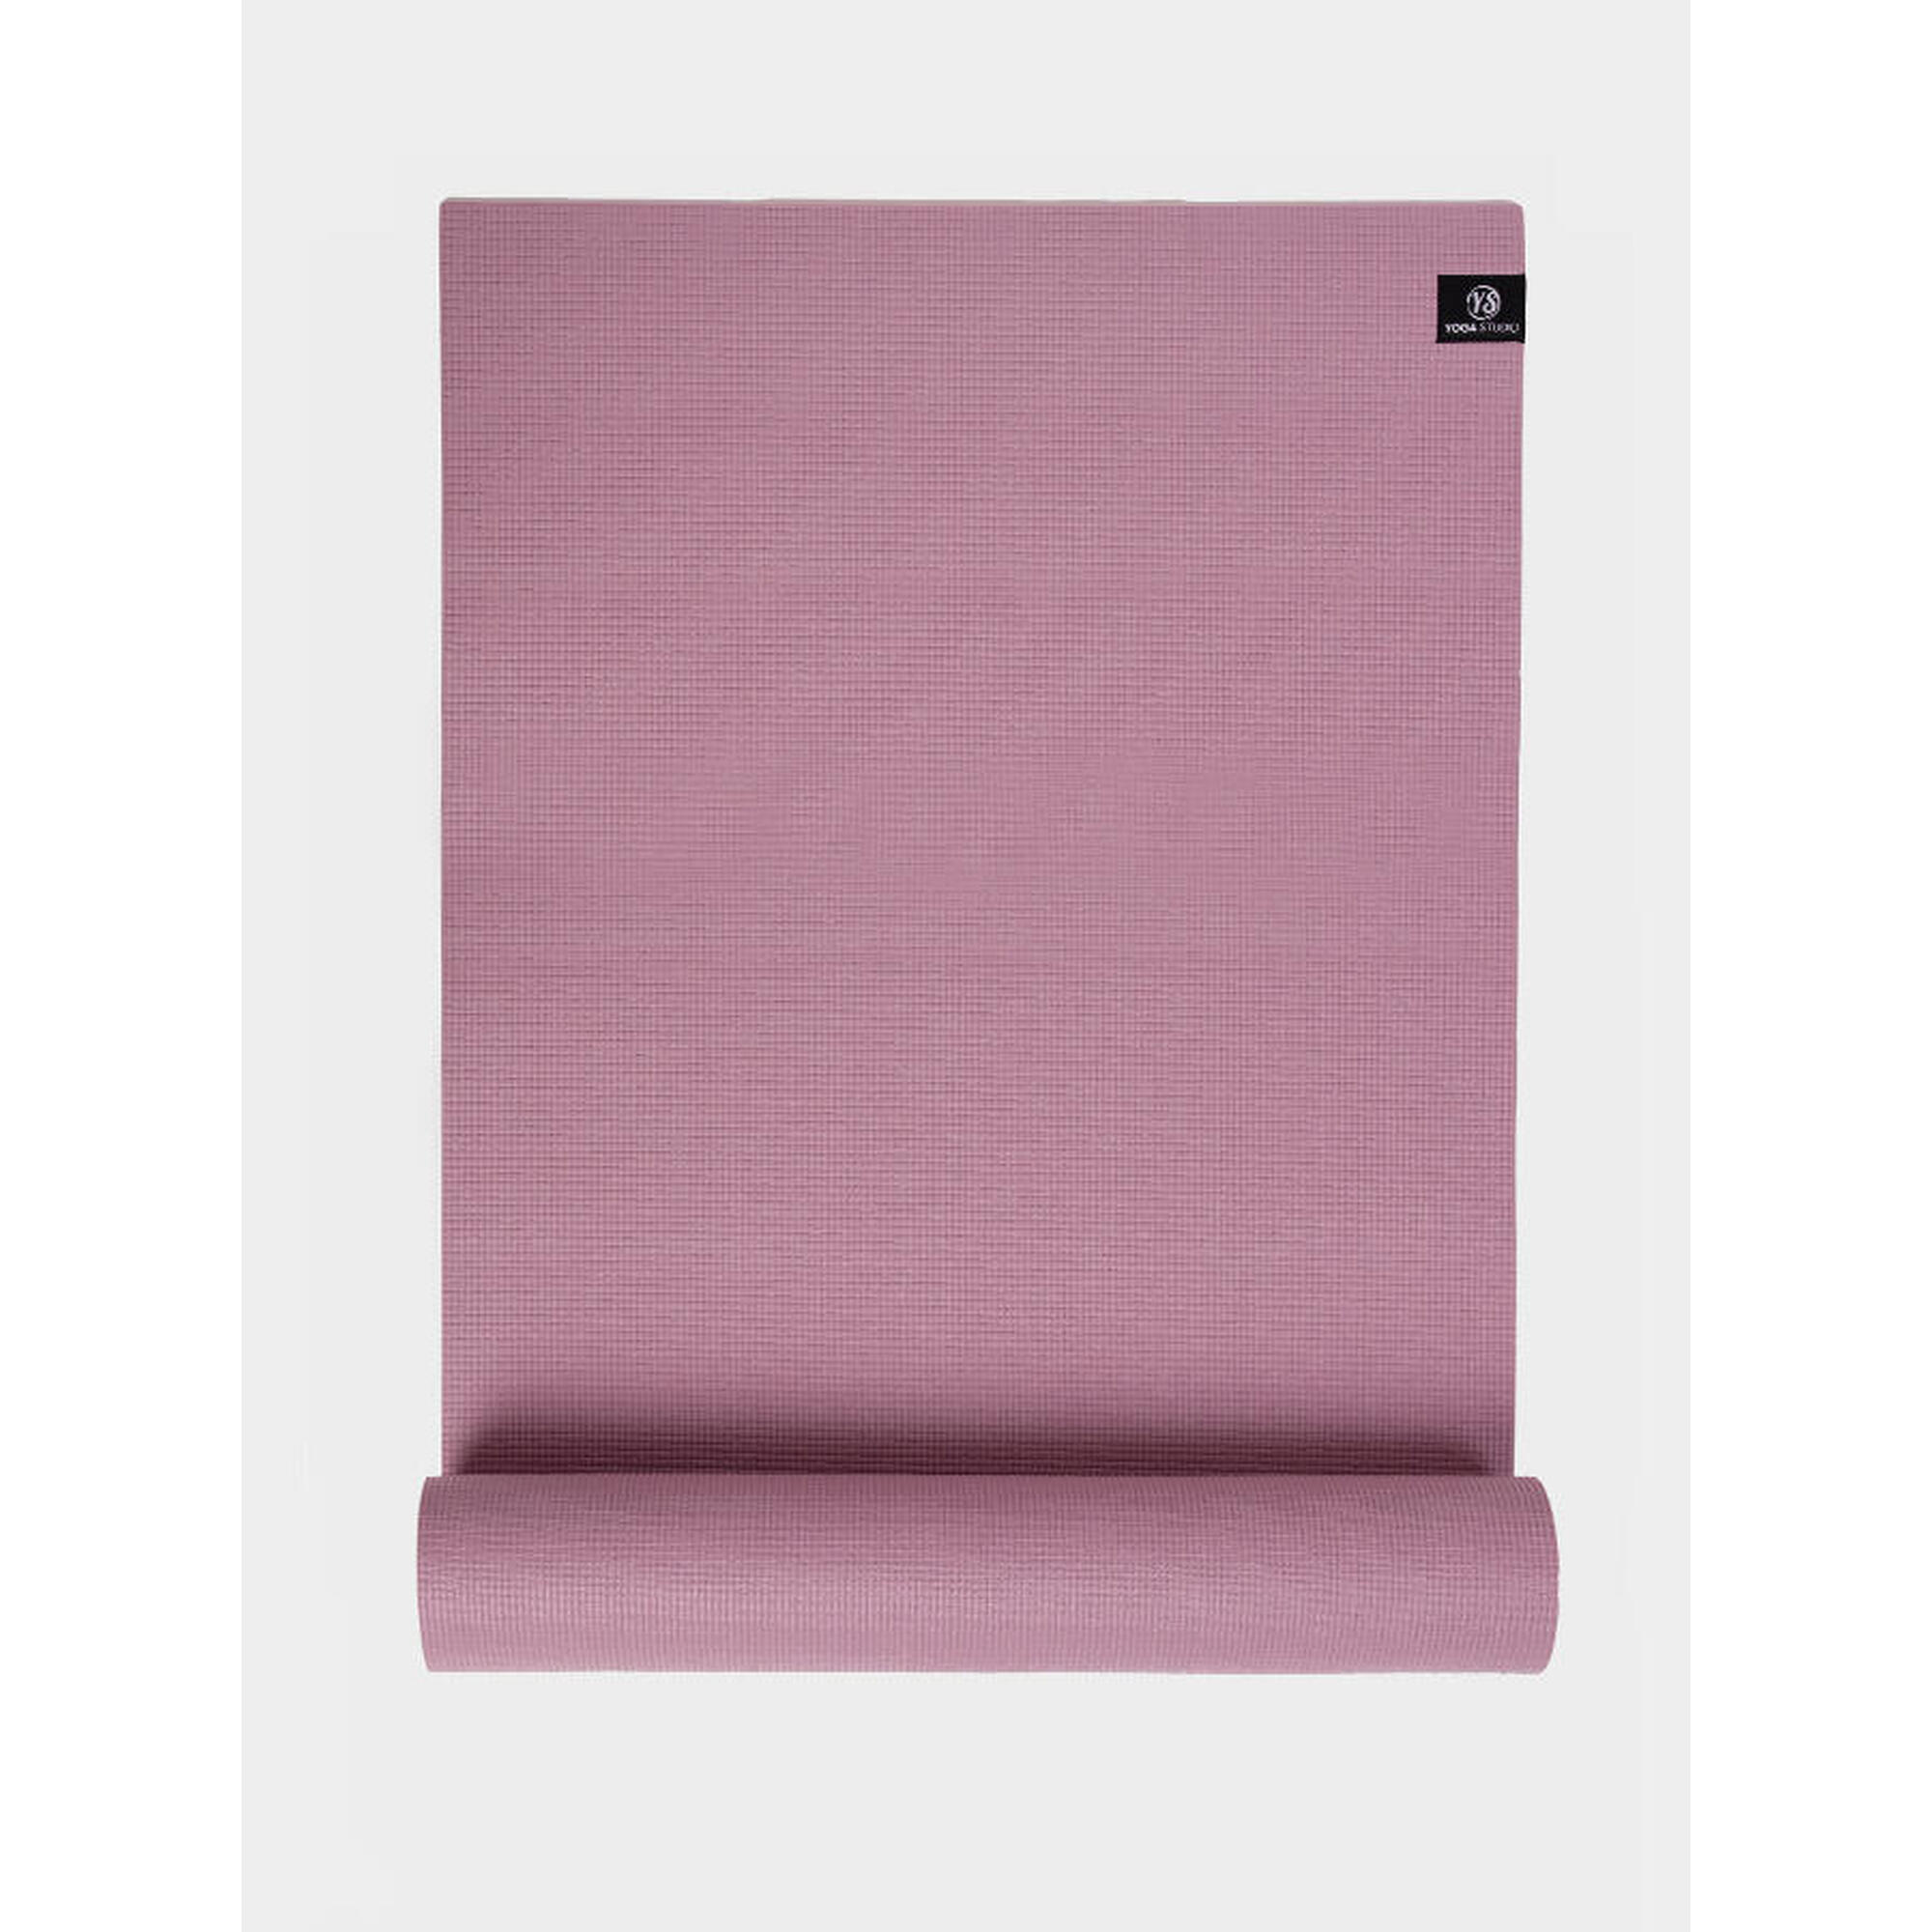 YOGA STUDIO The Yoga Studio Sticky Yoga Mat 6mm - Dusty Pink